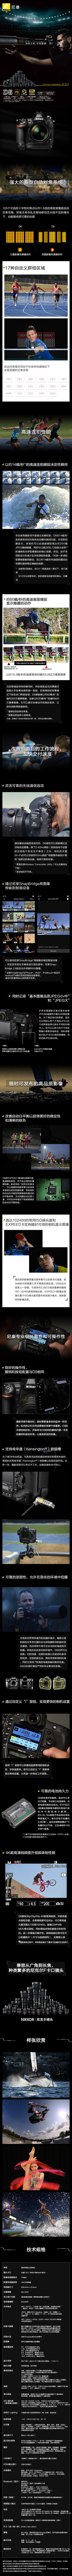 FireShot Capture 004 - 【尼康D6】尼康（Nikon）D6 全画幅单反相机 单反机身【行情 报价 价格 评测】-京东 - item.jd.com.png